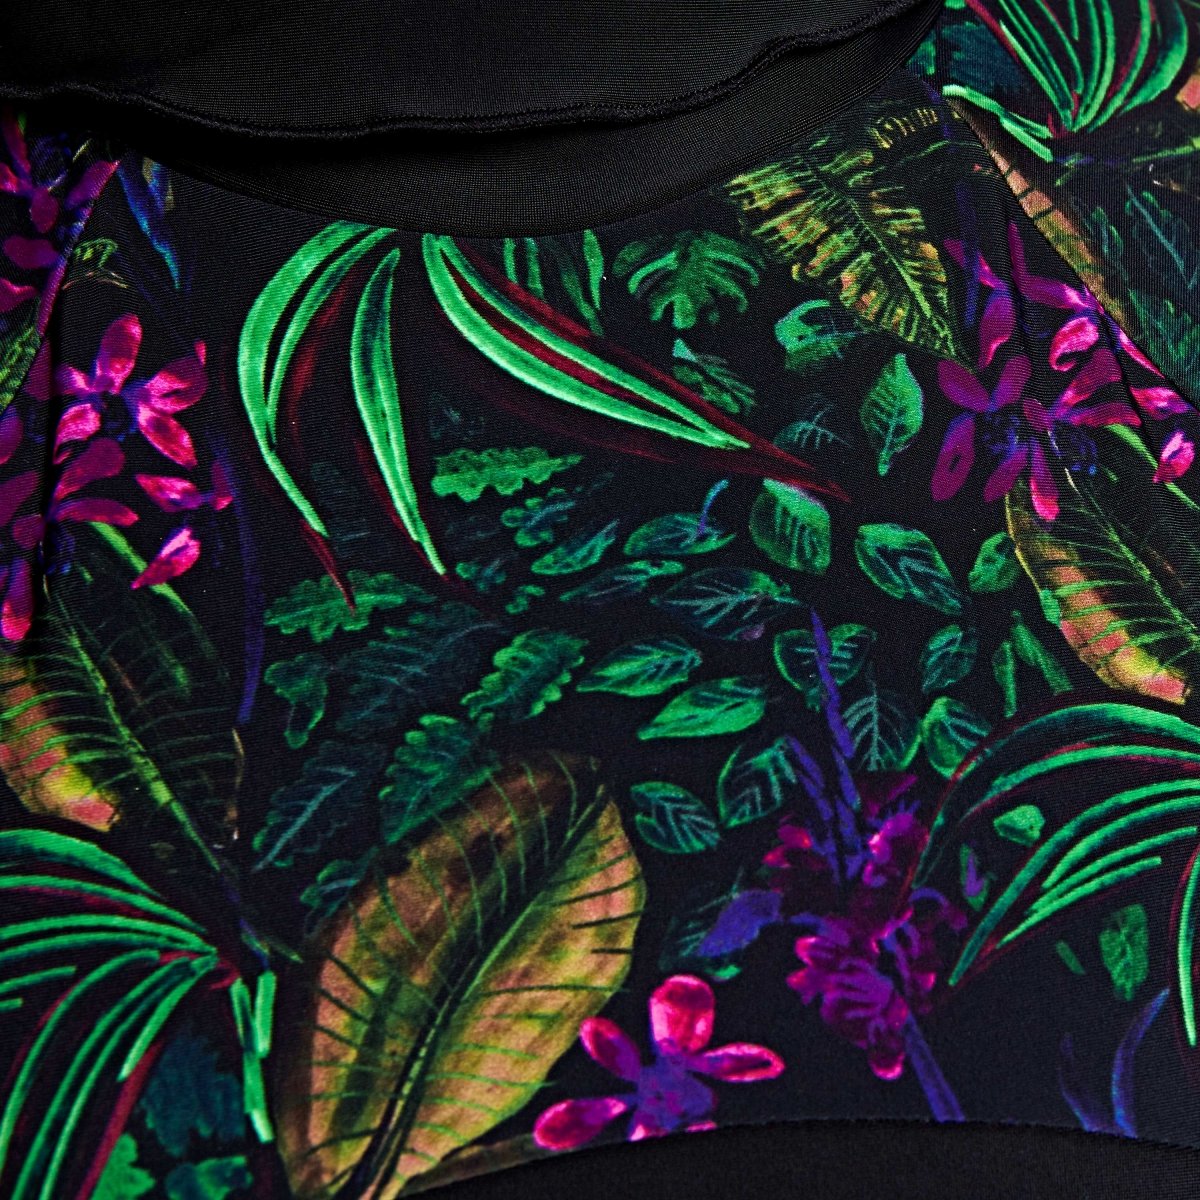 Zoggs Dark Botanical 3-Piece Modesty Swim Suit - Divinity Collection